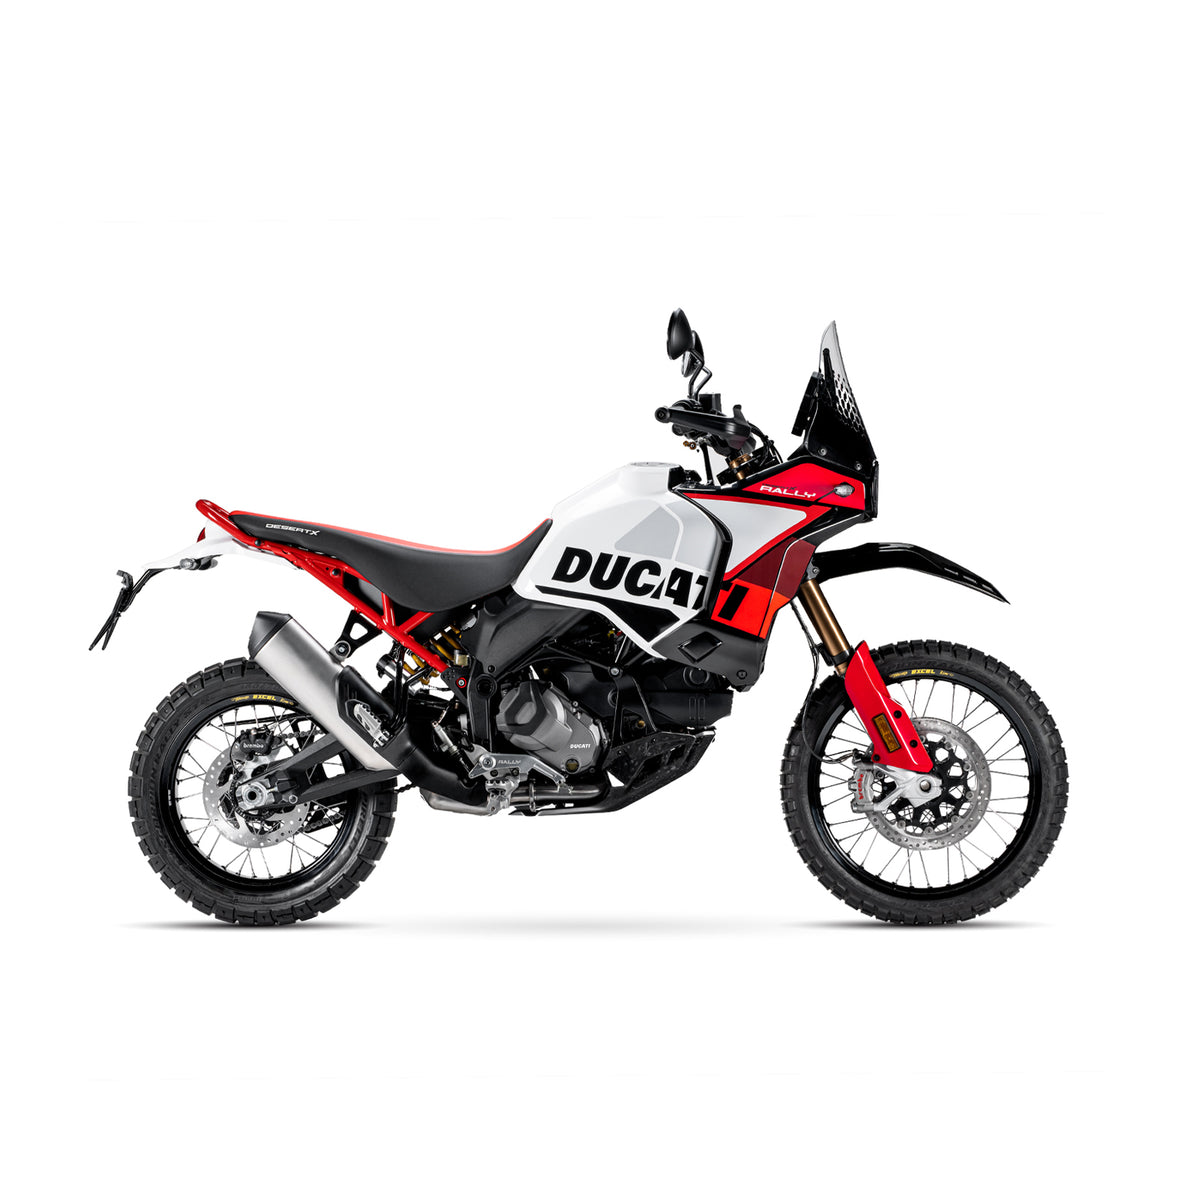 Ducati DesertX Rally For Sale - Best Ducati Dealership - Iron Giant